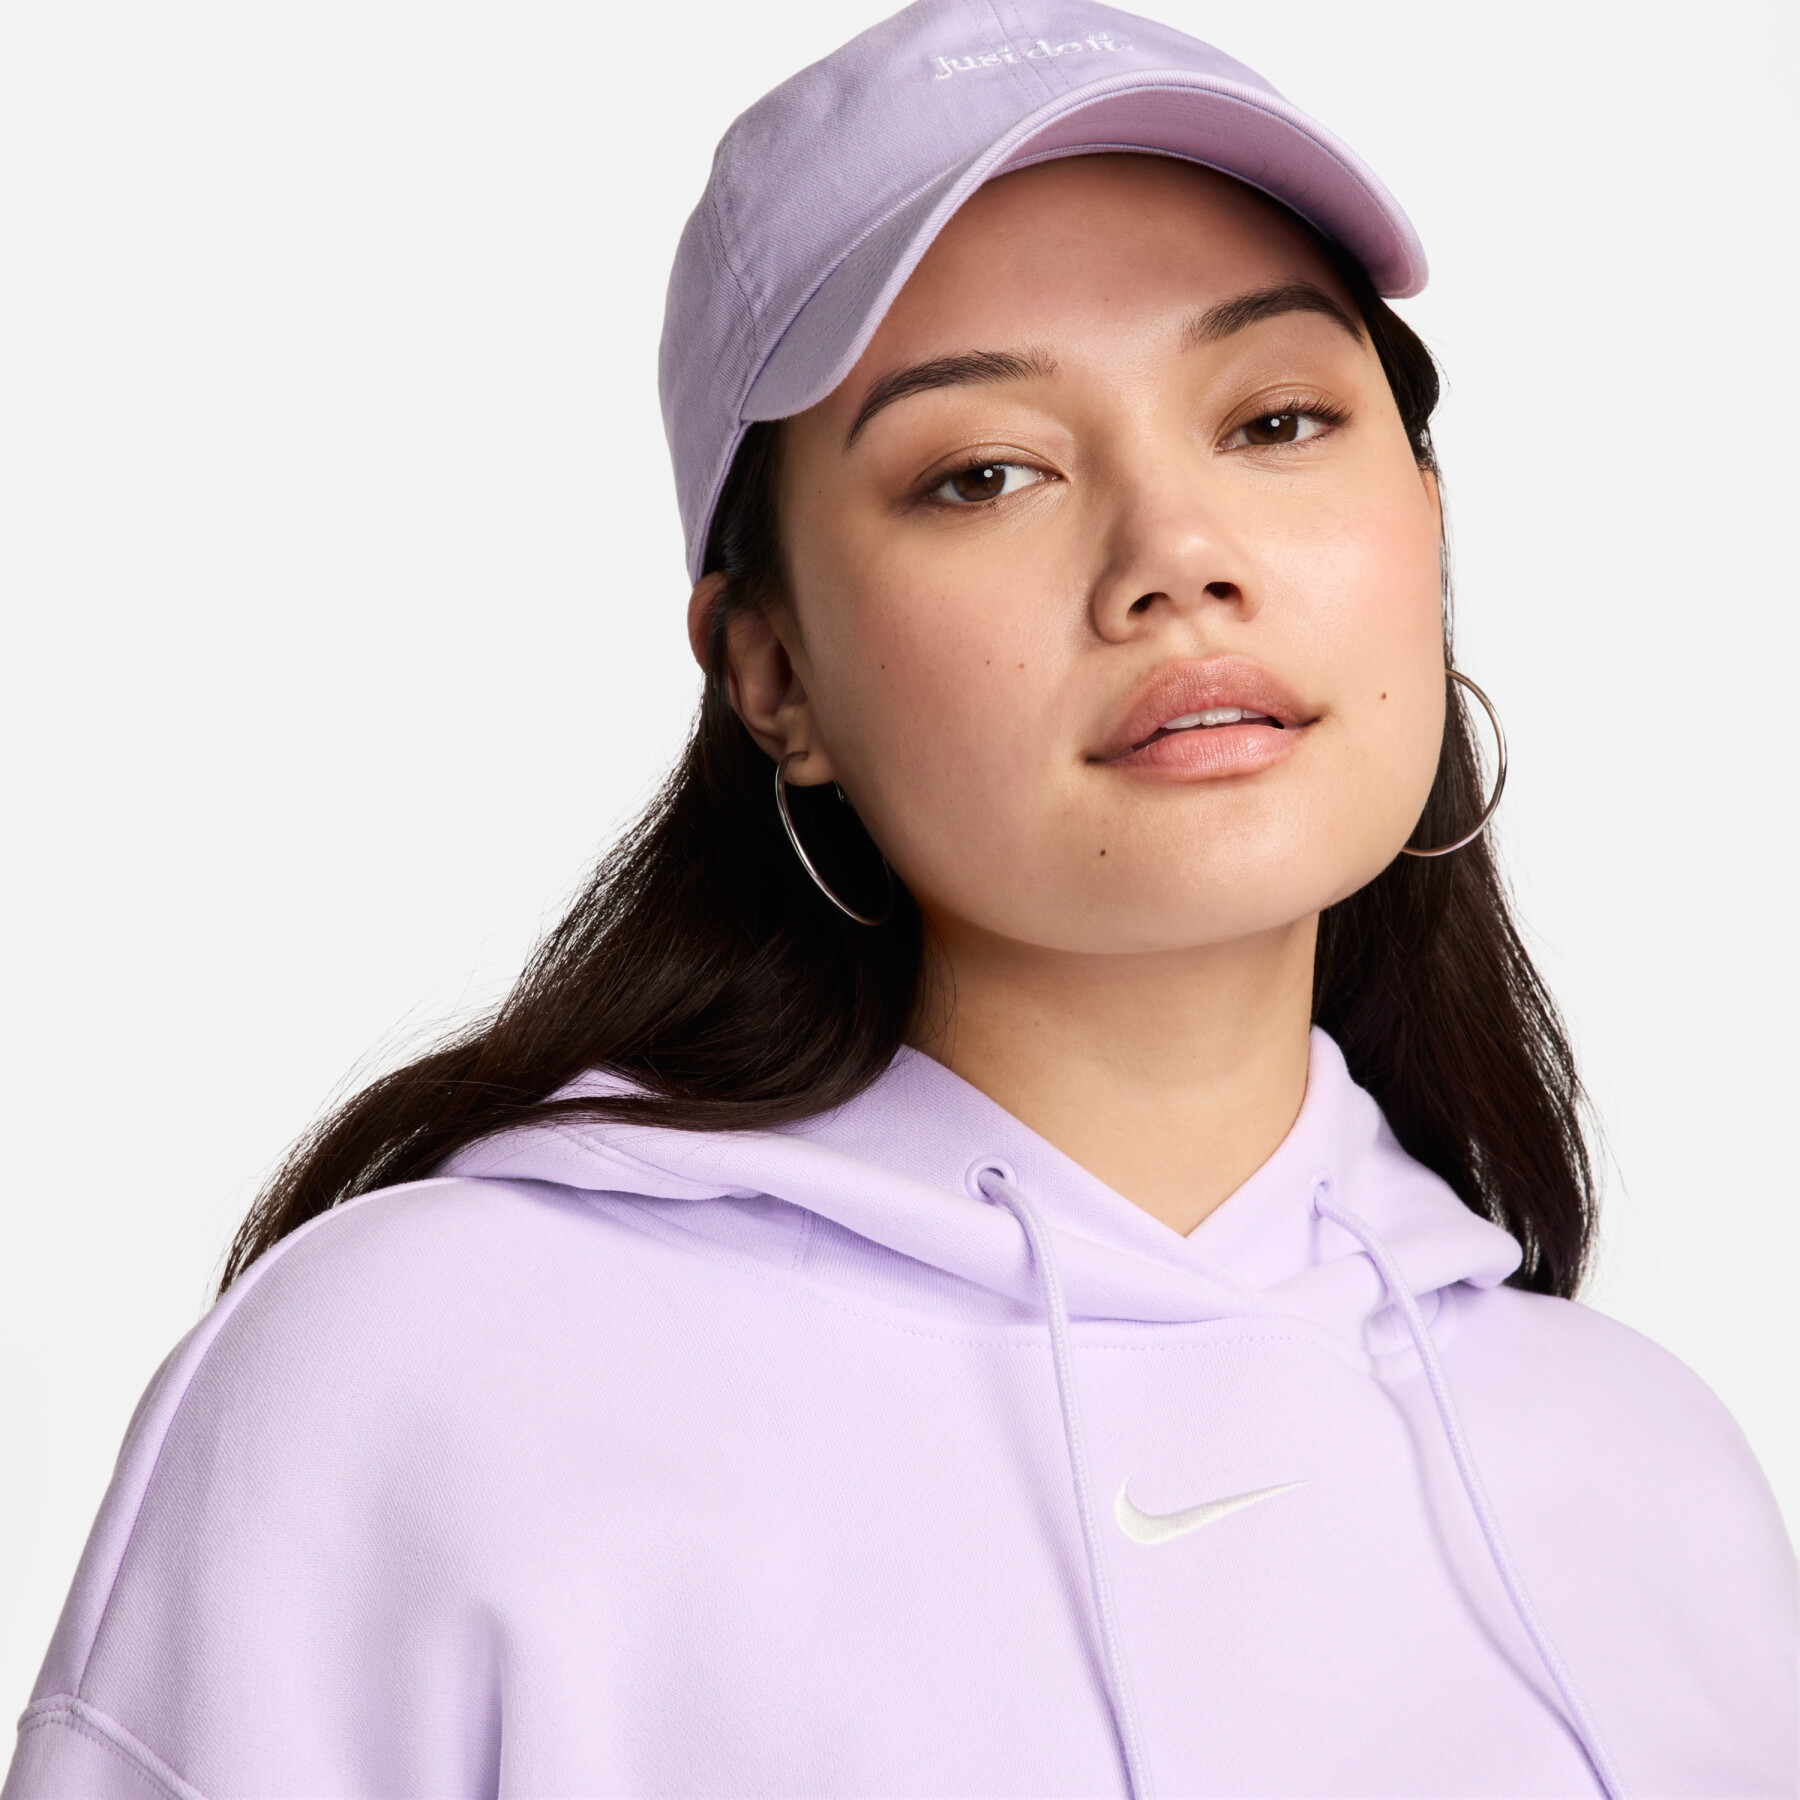 Women's hooded sweatshirt Nike Phoenix Fleece